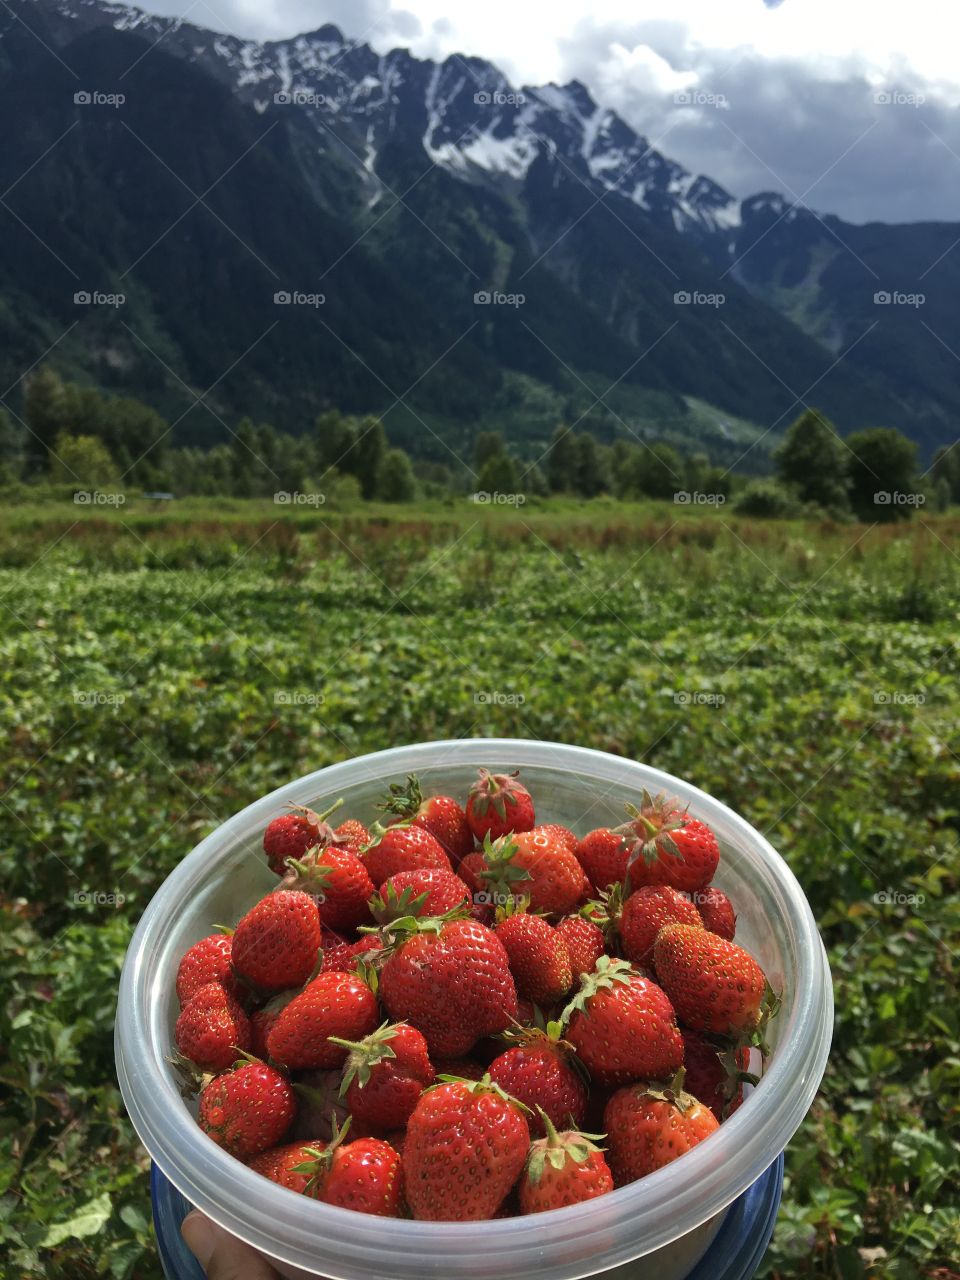 Farm to table organic strawberries 